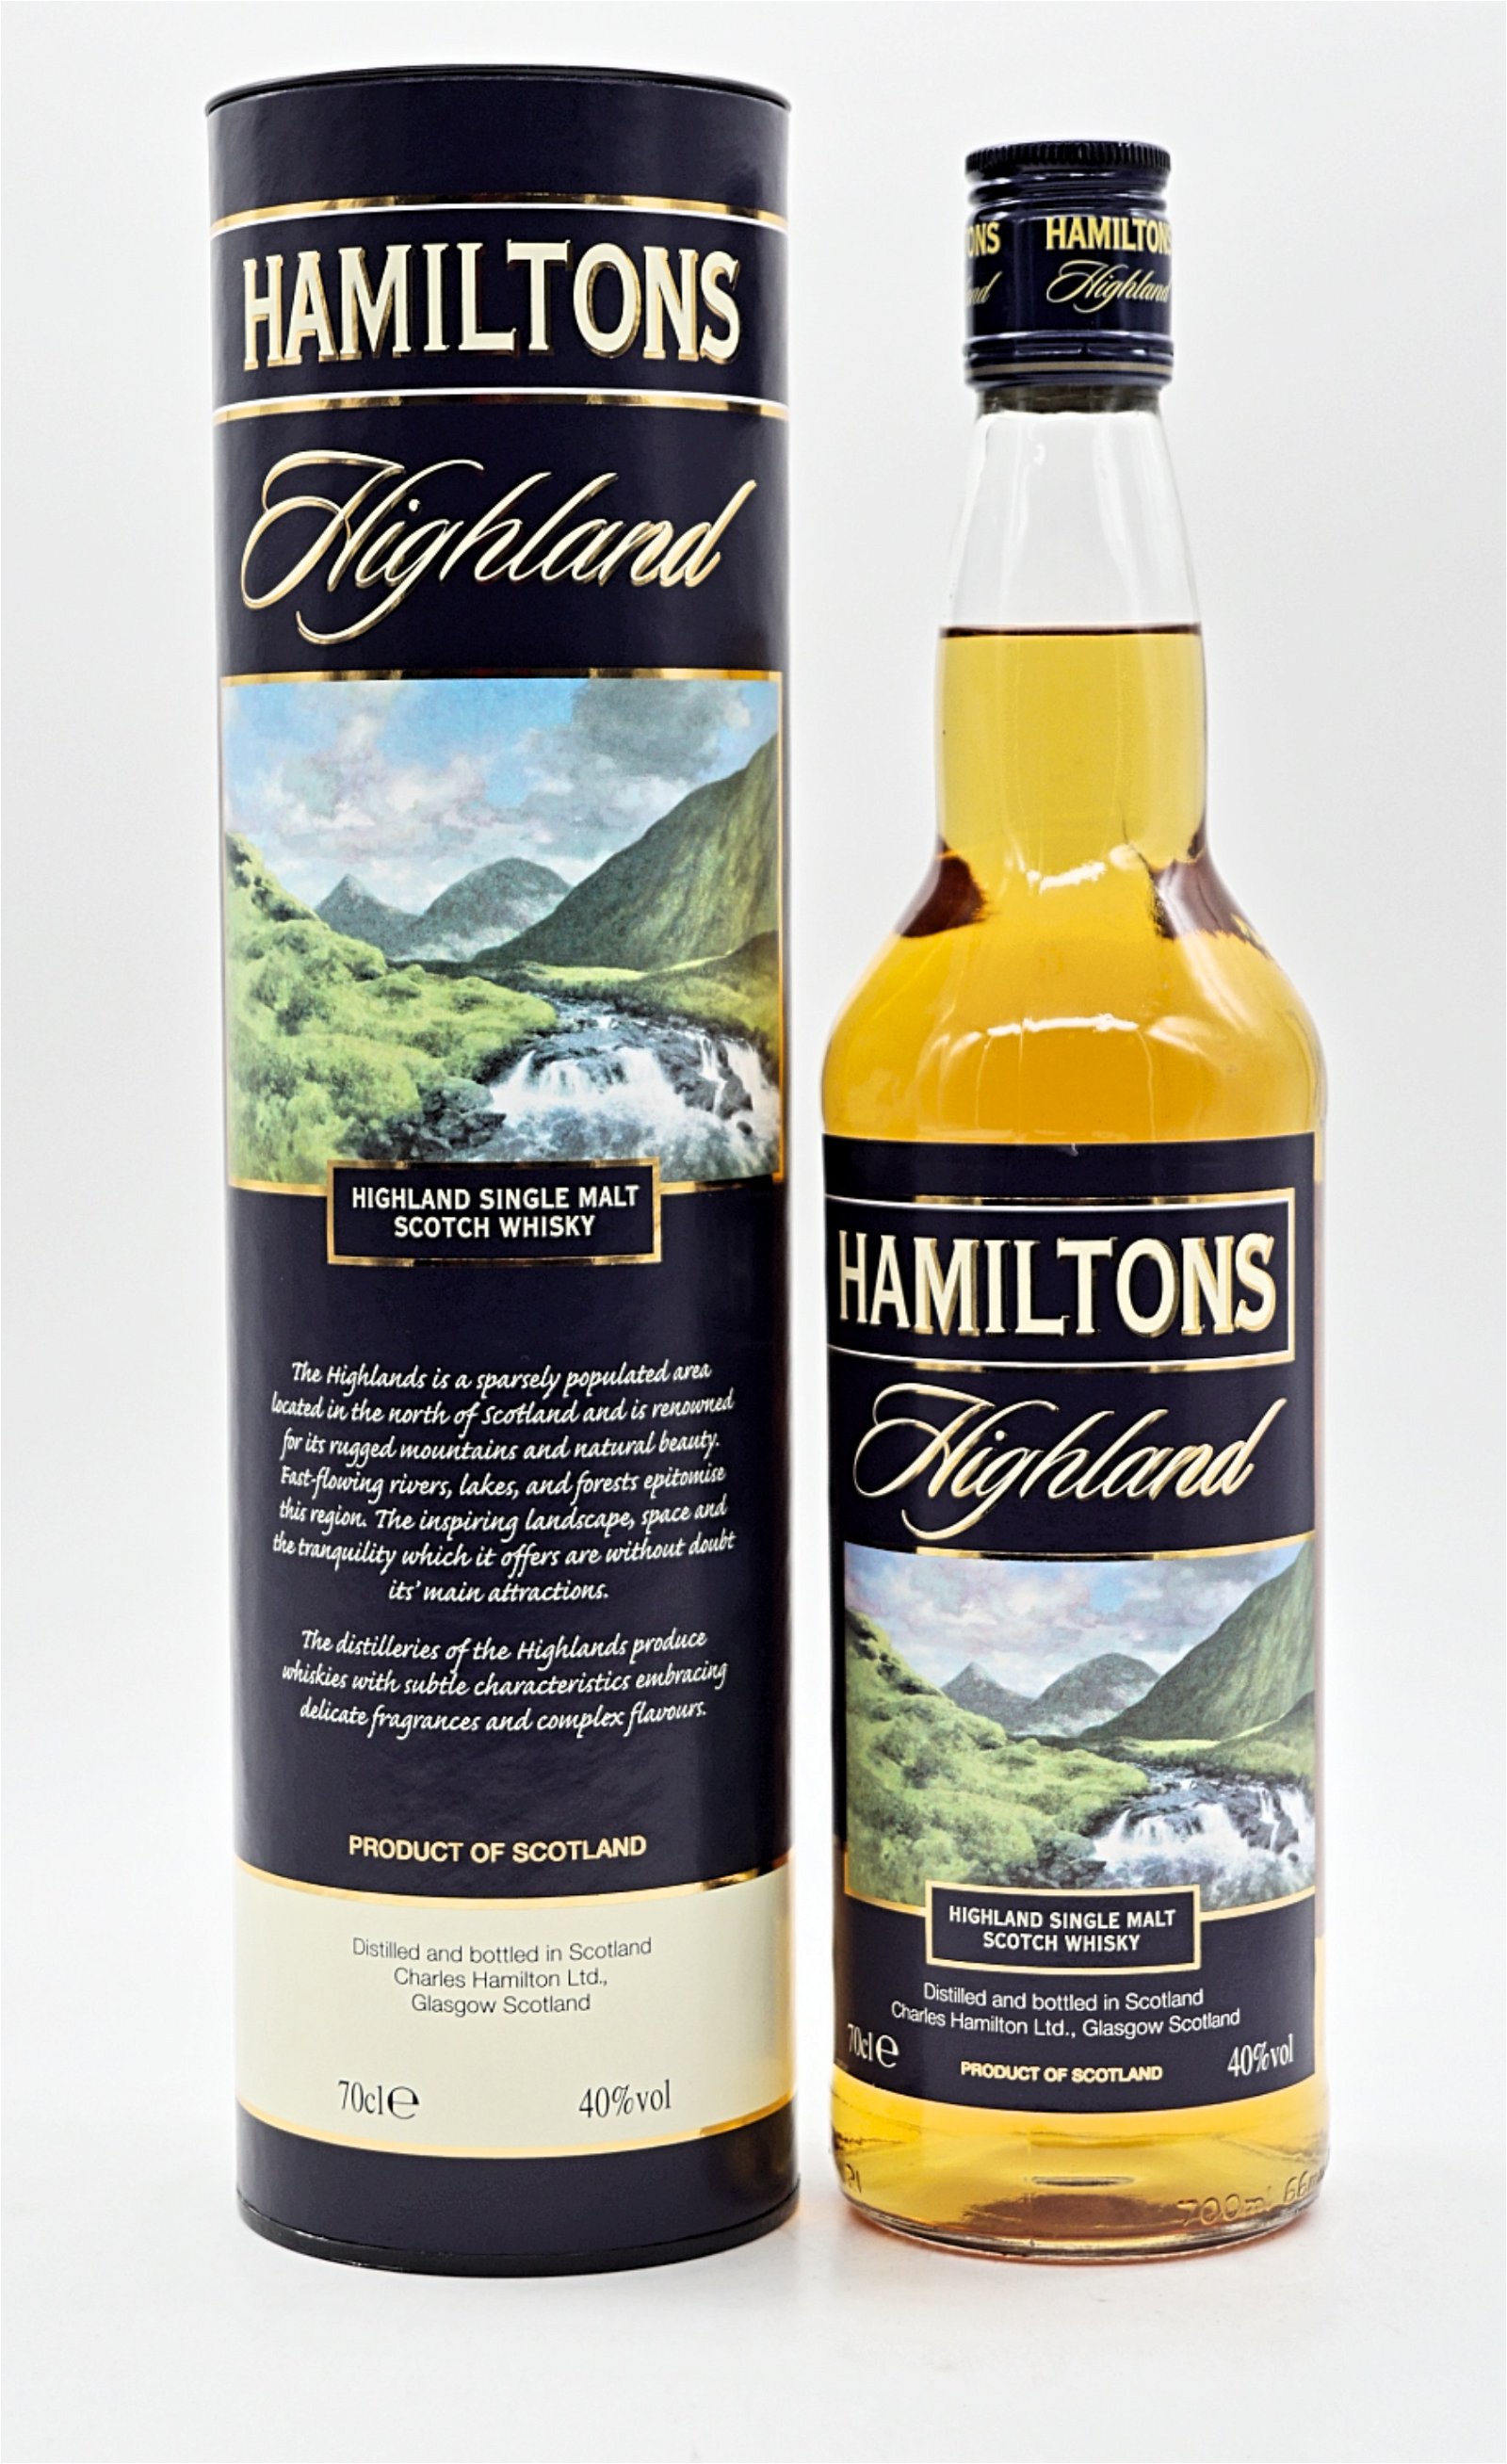 Hamiltons Highland Single Malt Scotch Whisky